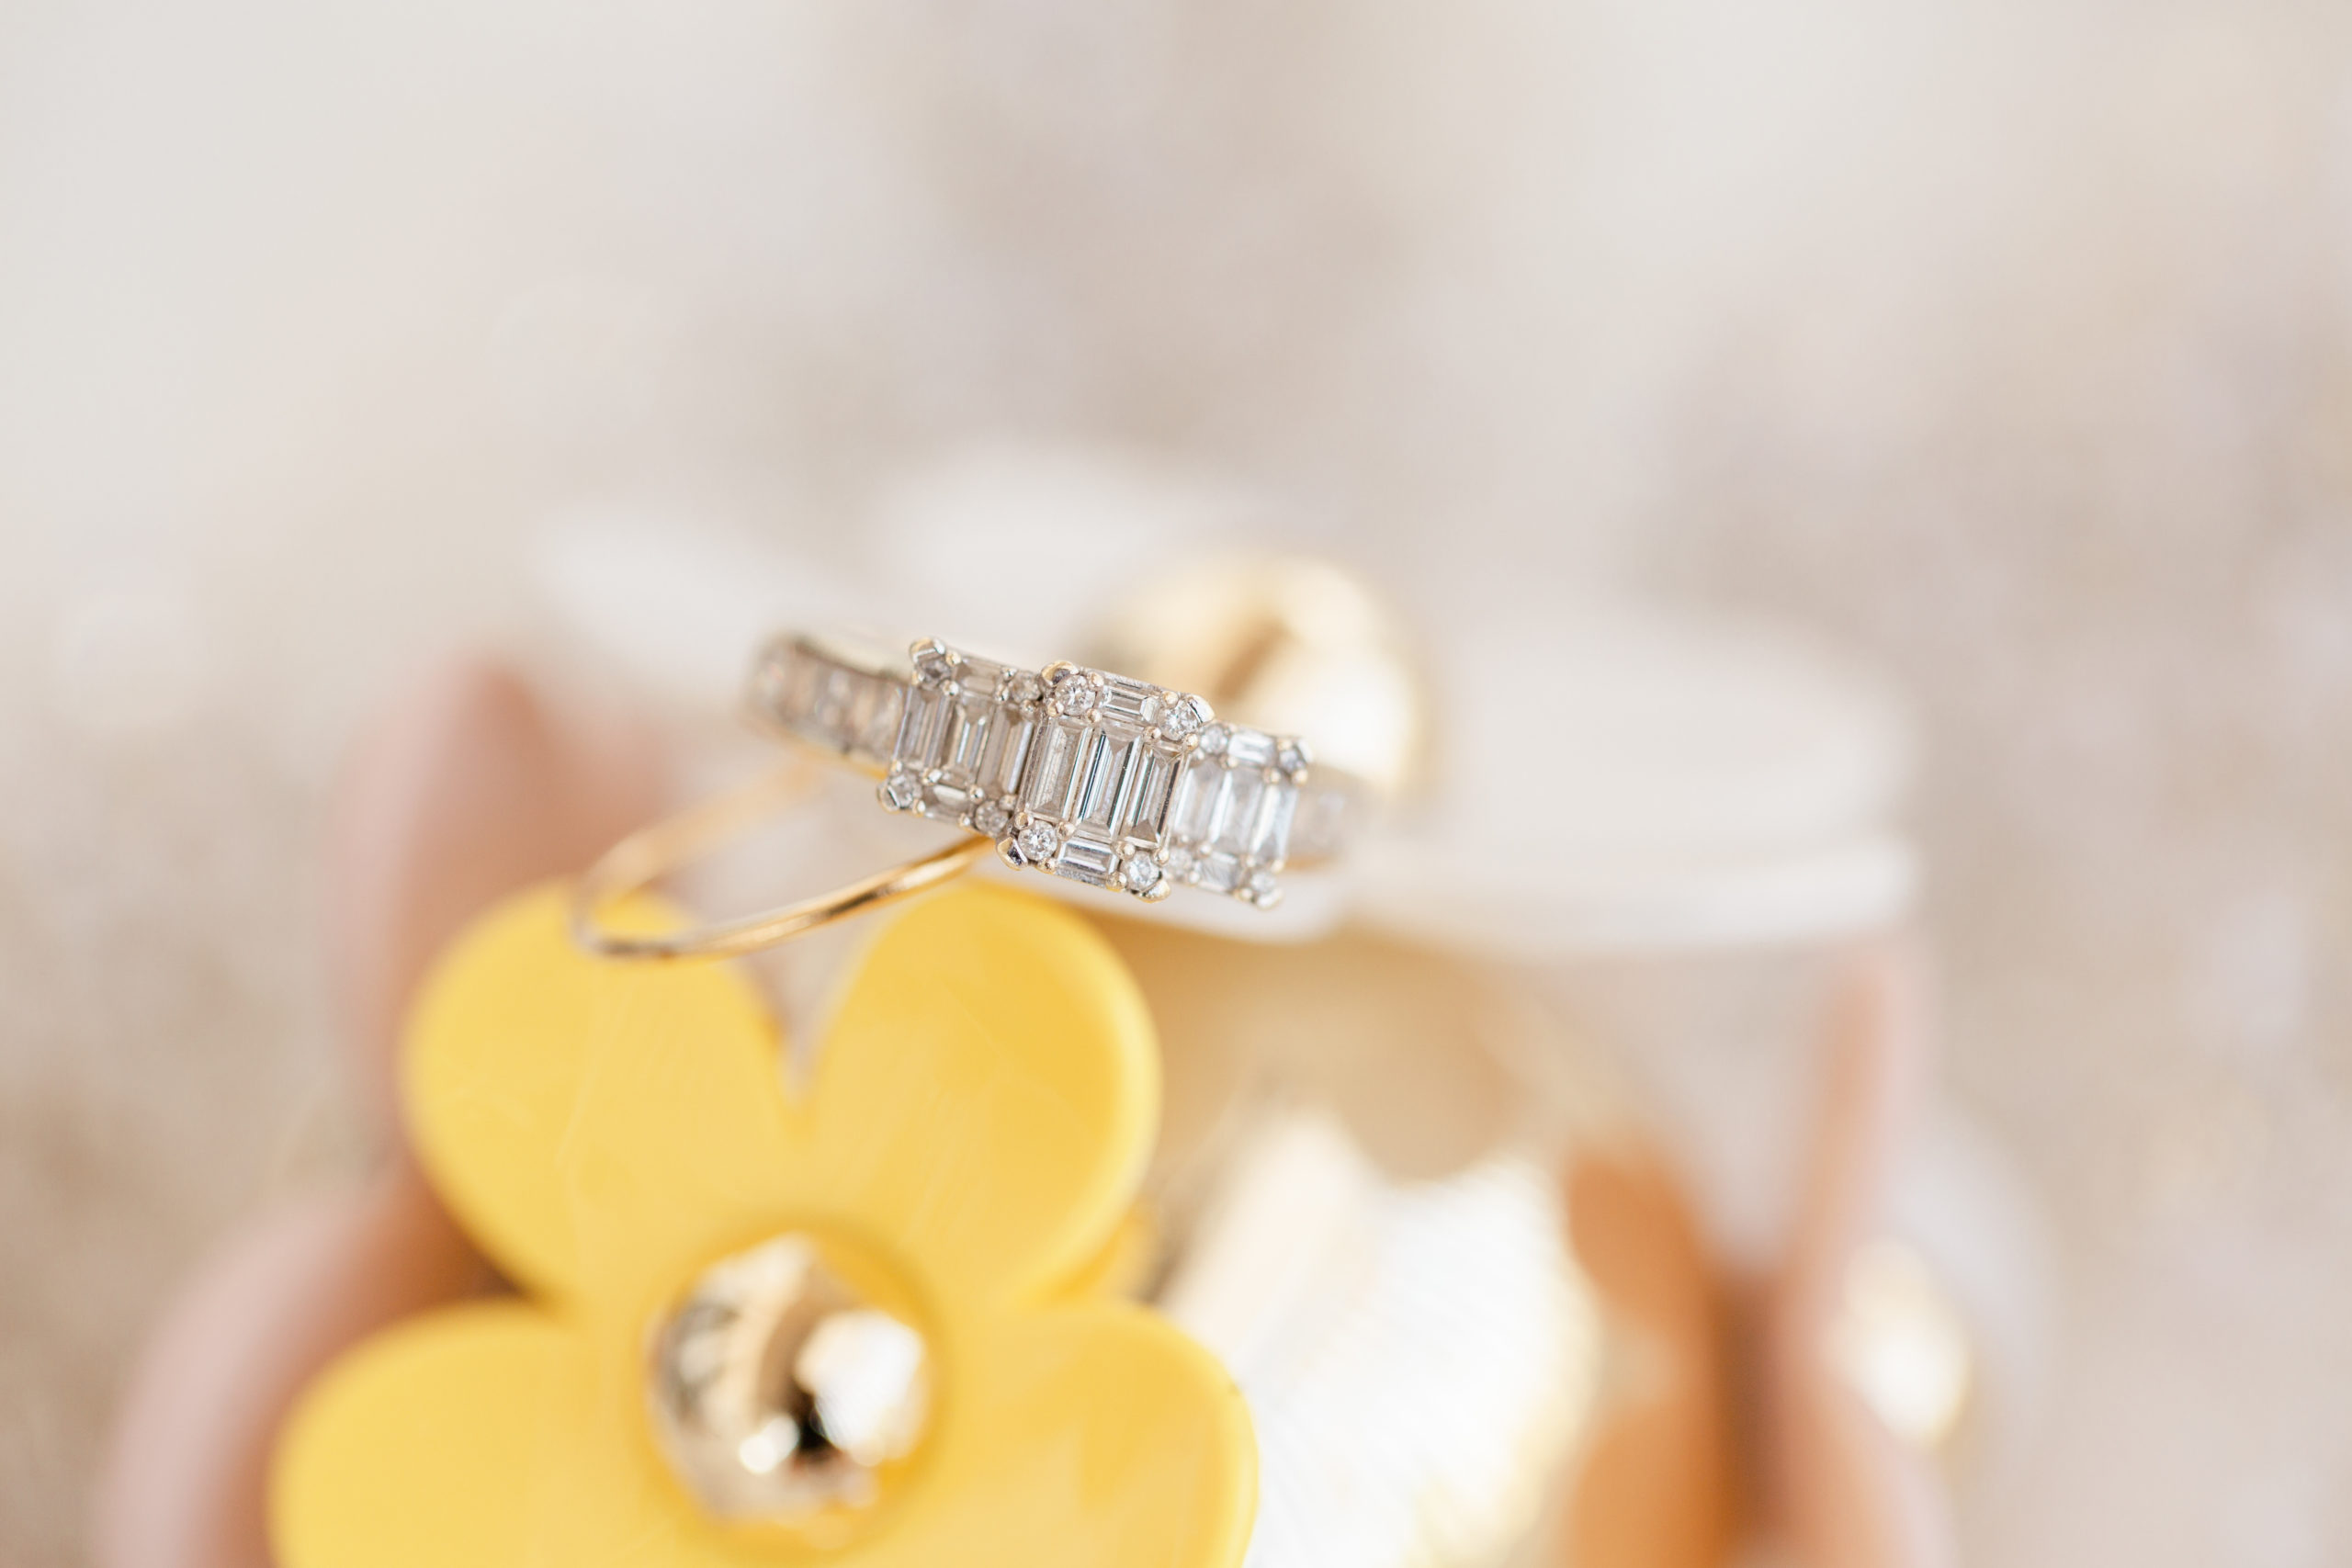 wedding ring details shot on yellow flower